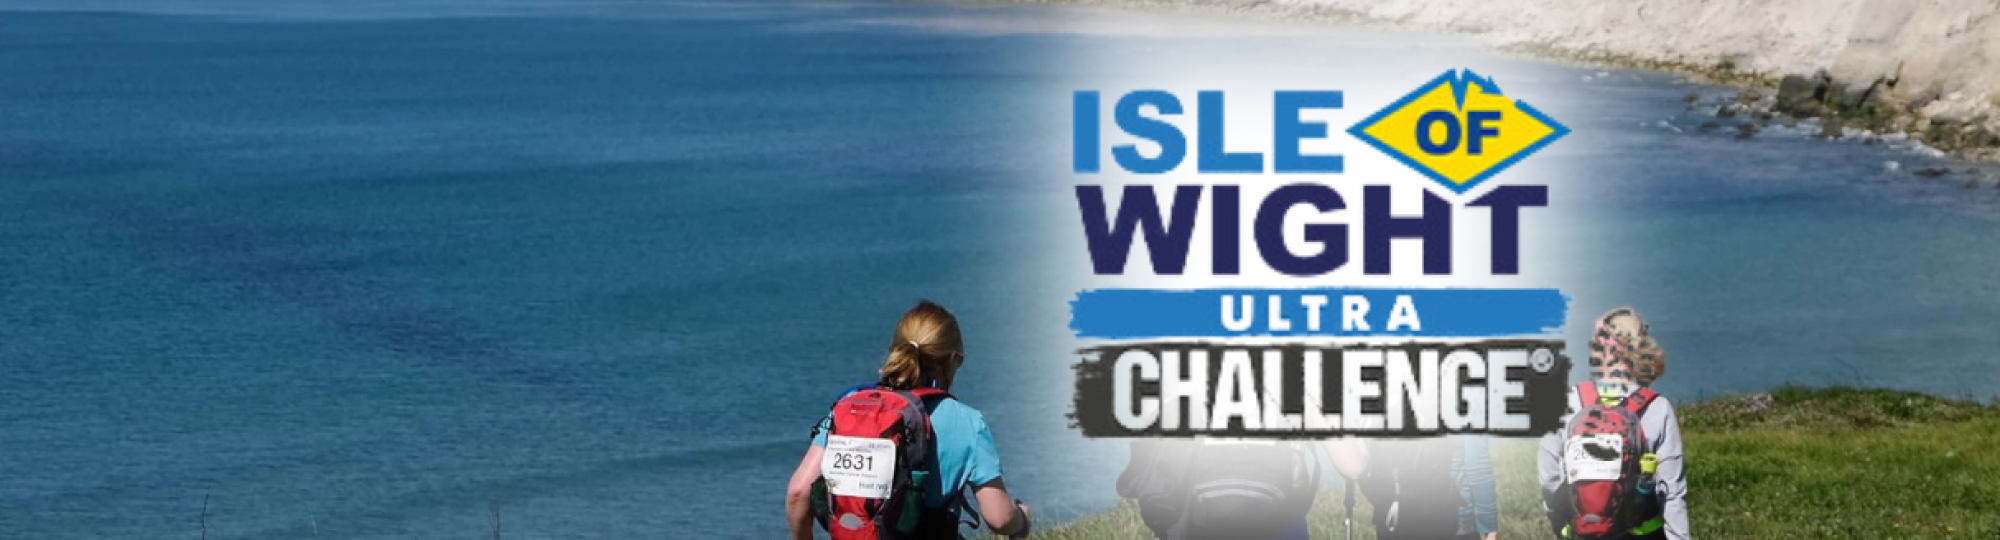 Isle of wight challenge